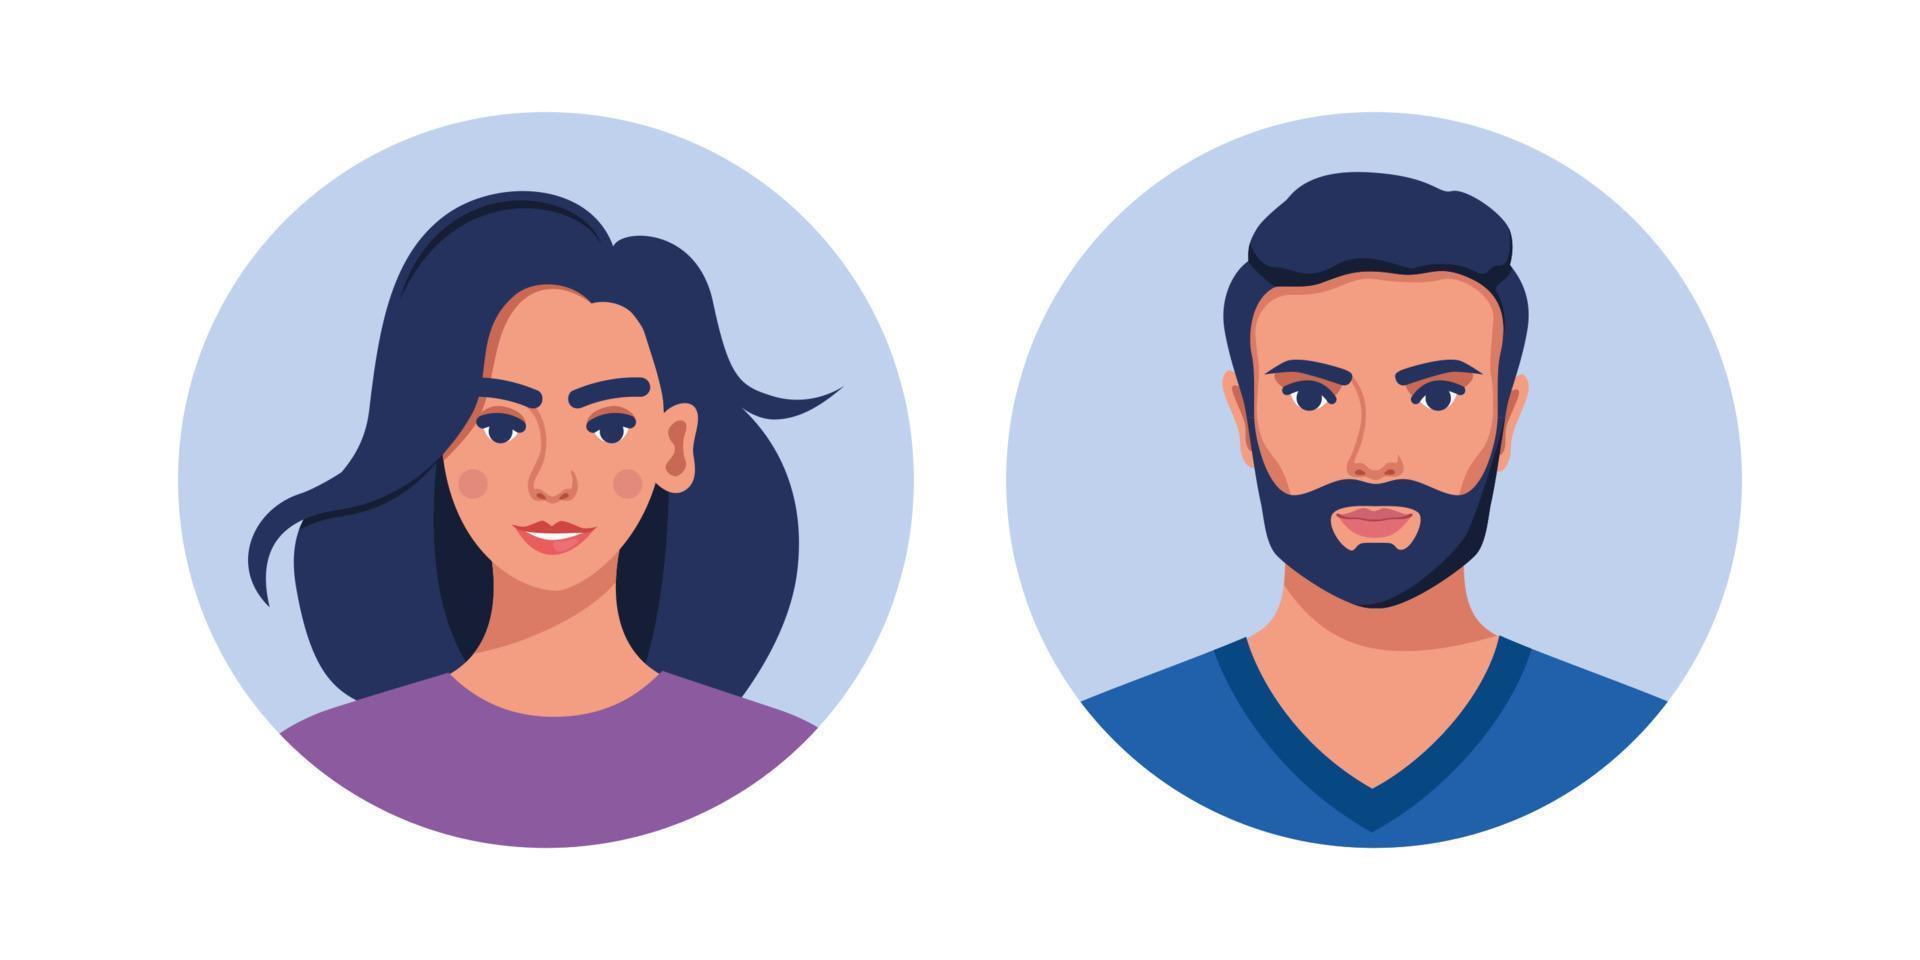 glimlachen mensen avatars. Mens en vrouw karakter. portretten. mannetje en vrouw avatars in een cirkel. vector illustratie.